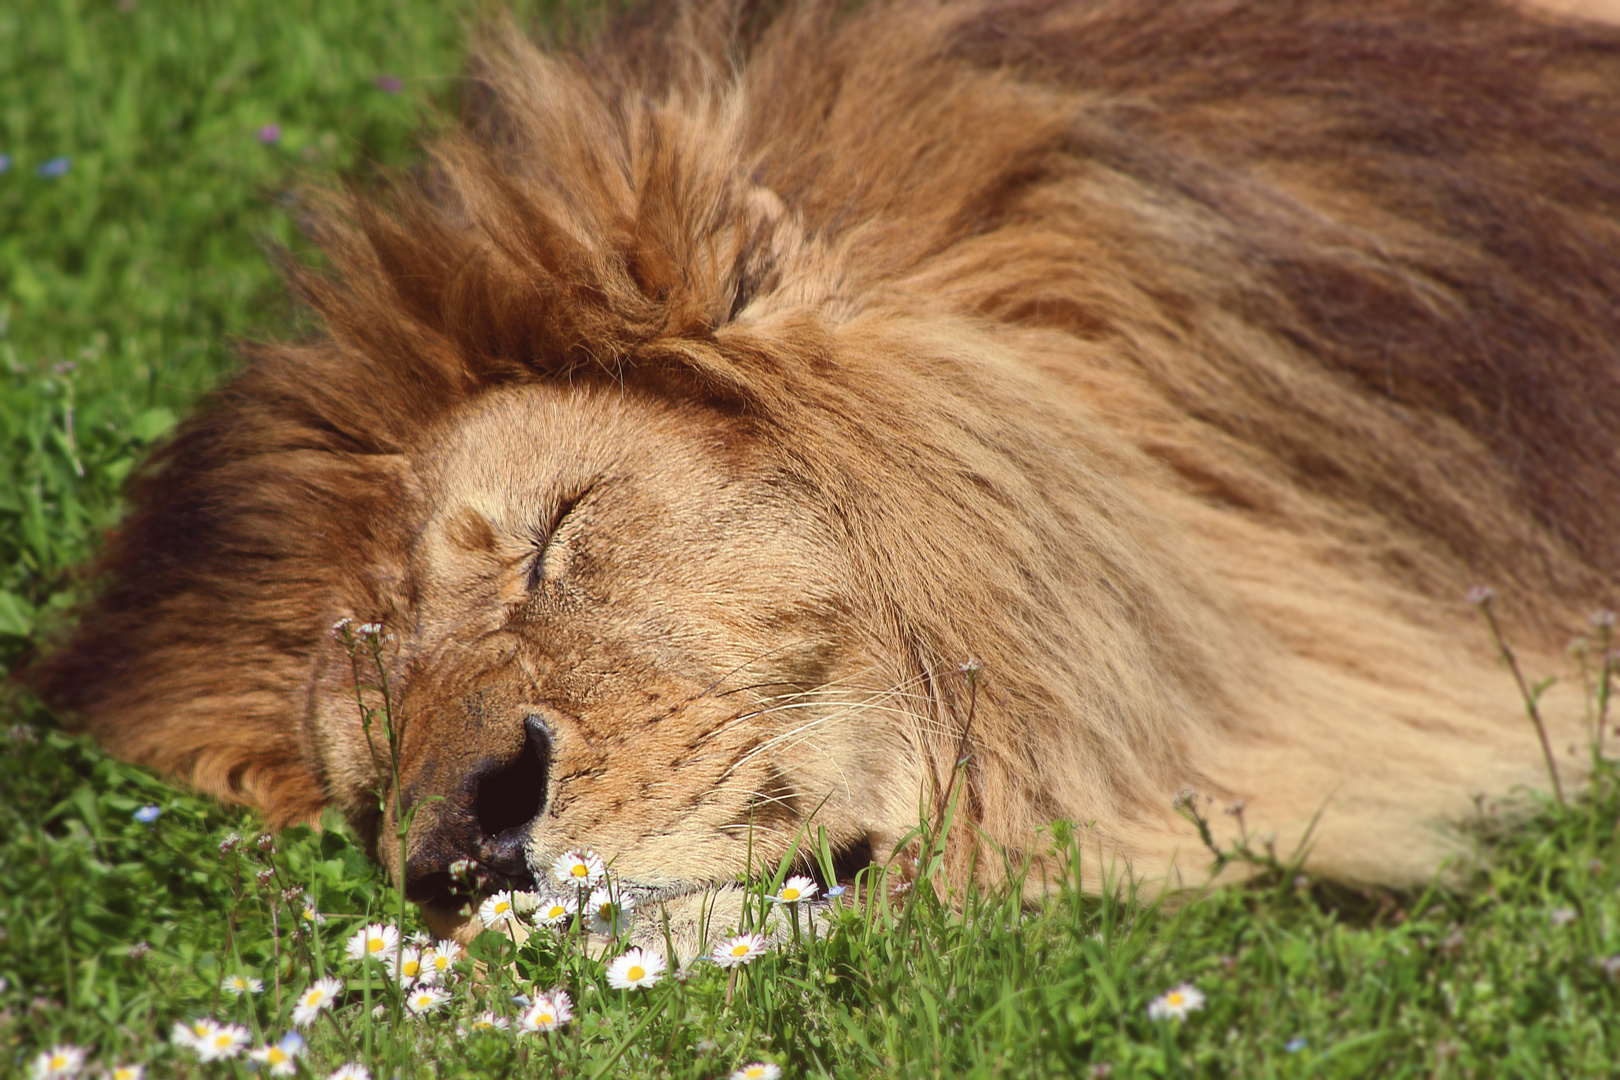 The lion sleeps..